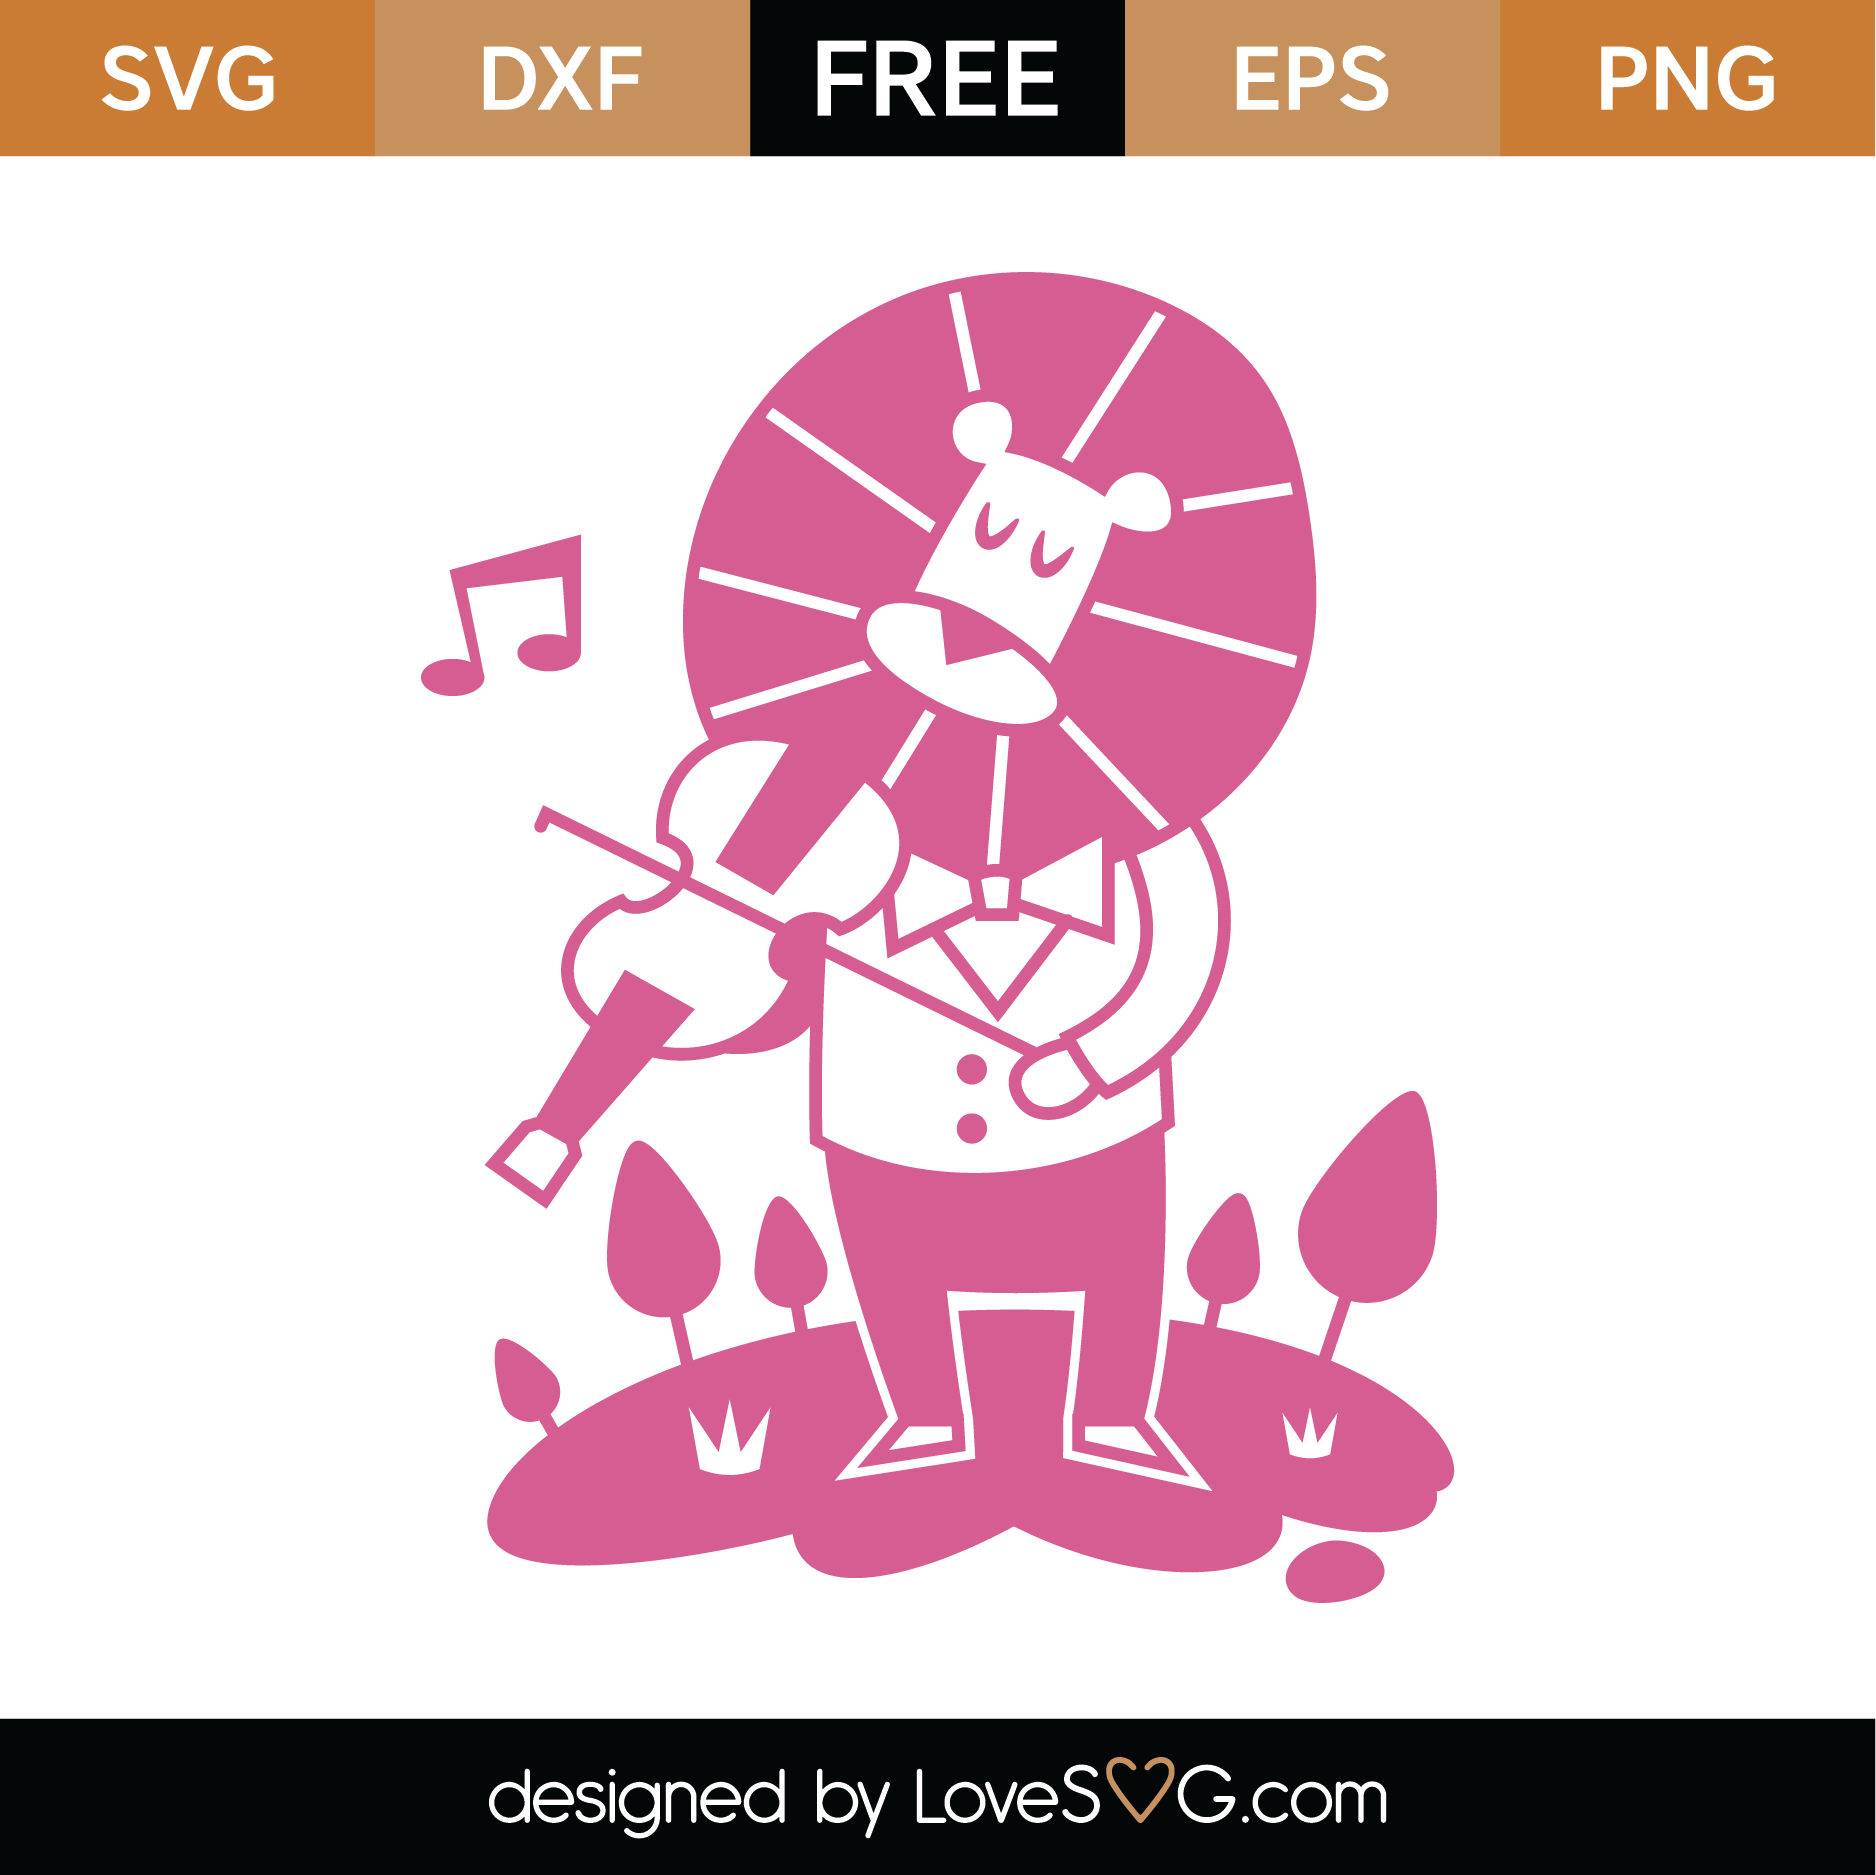 Download Free Whimsical Lion SVG Cut File | Lovesvg.com